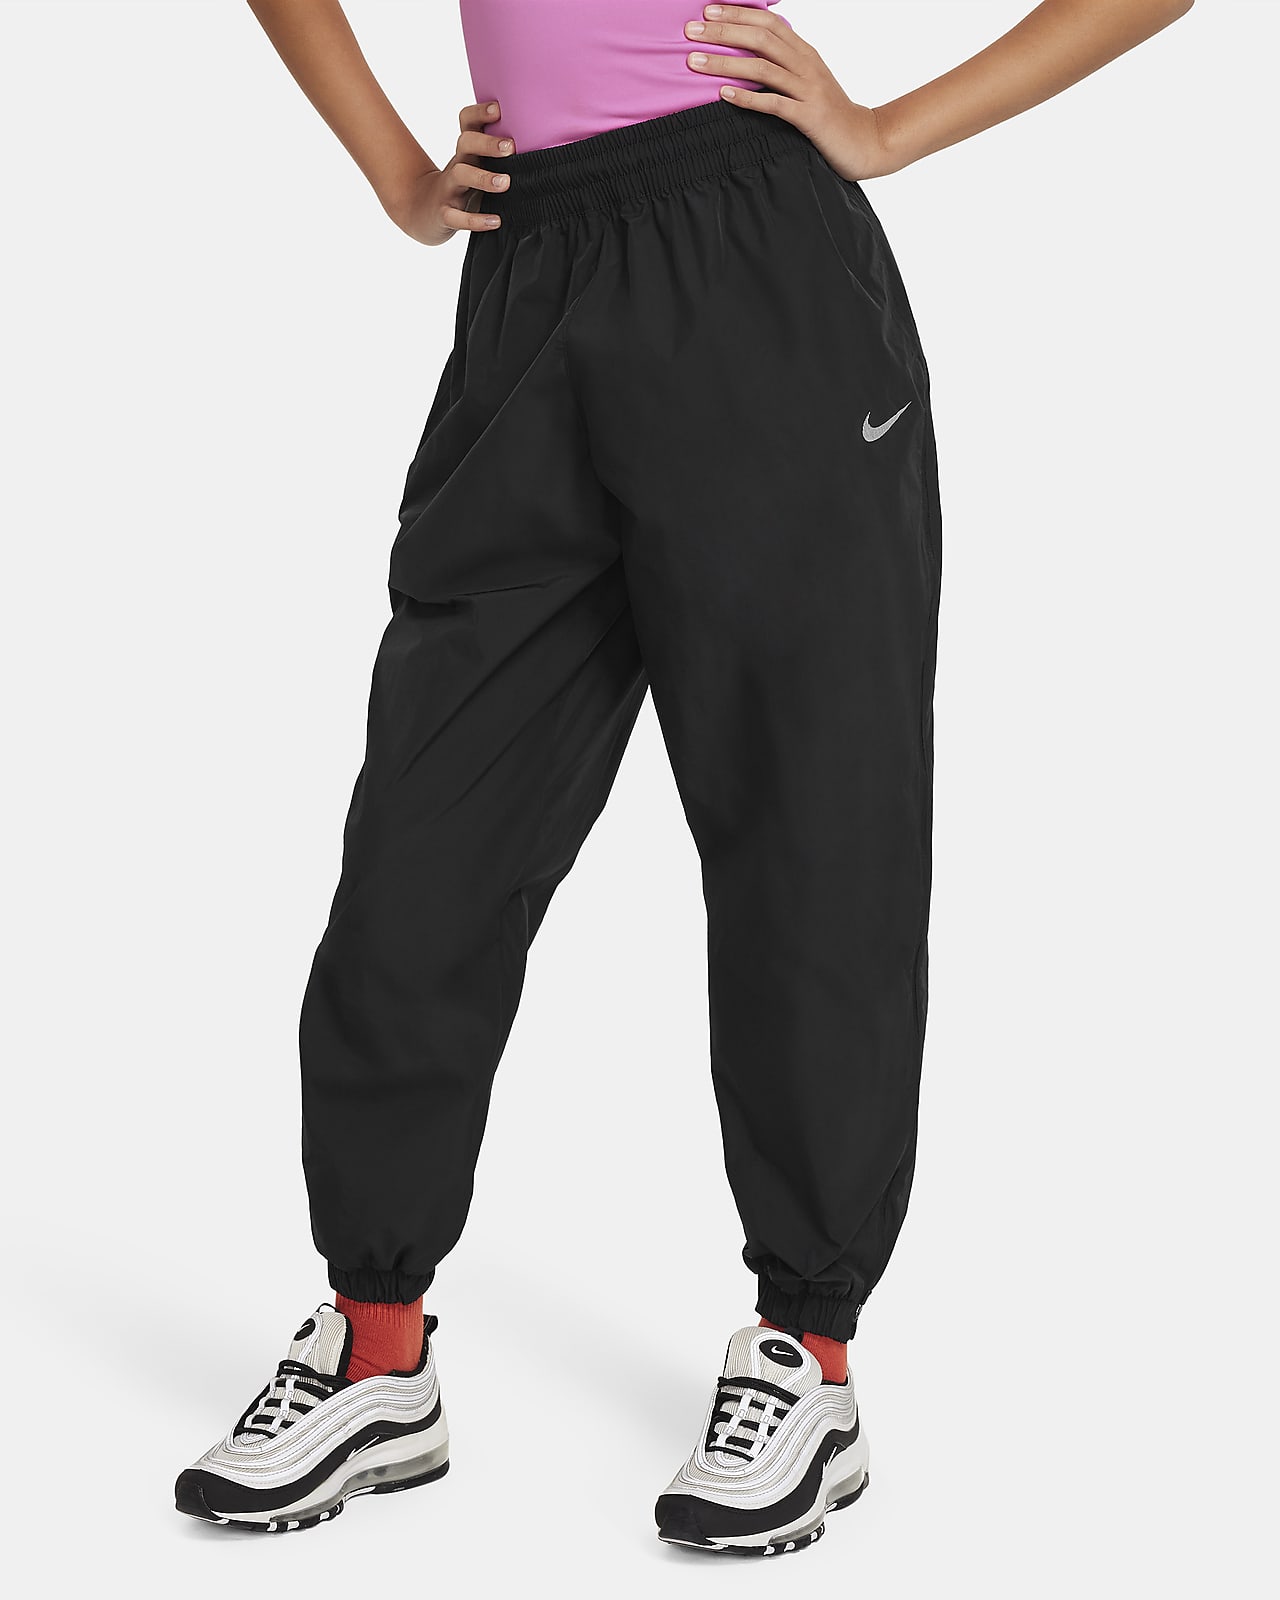 Nike Lined Track Pants 1125 - Ragstock.com